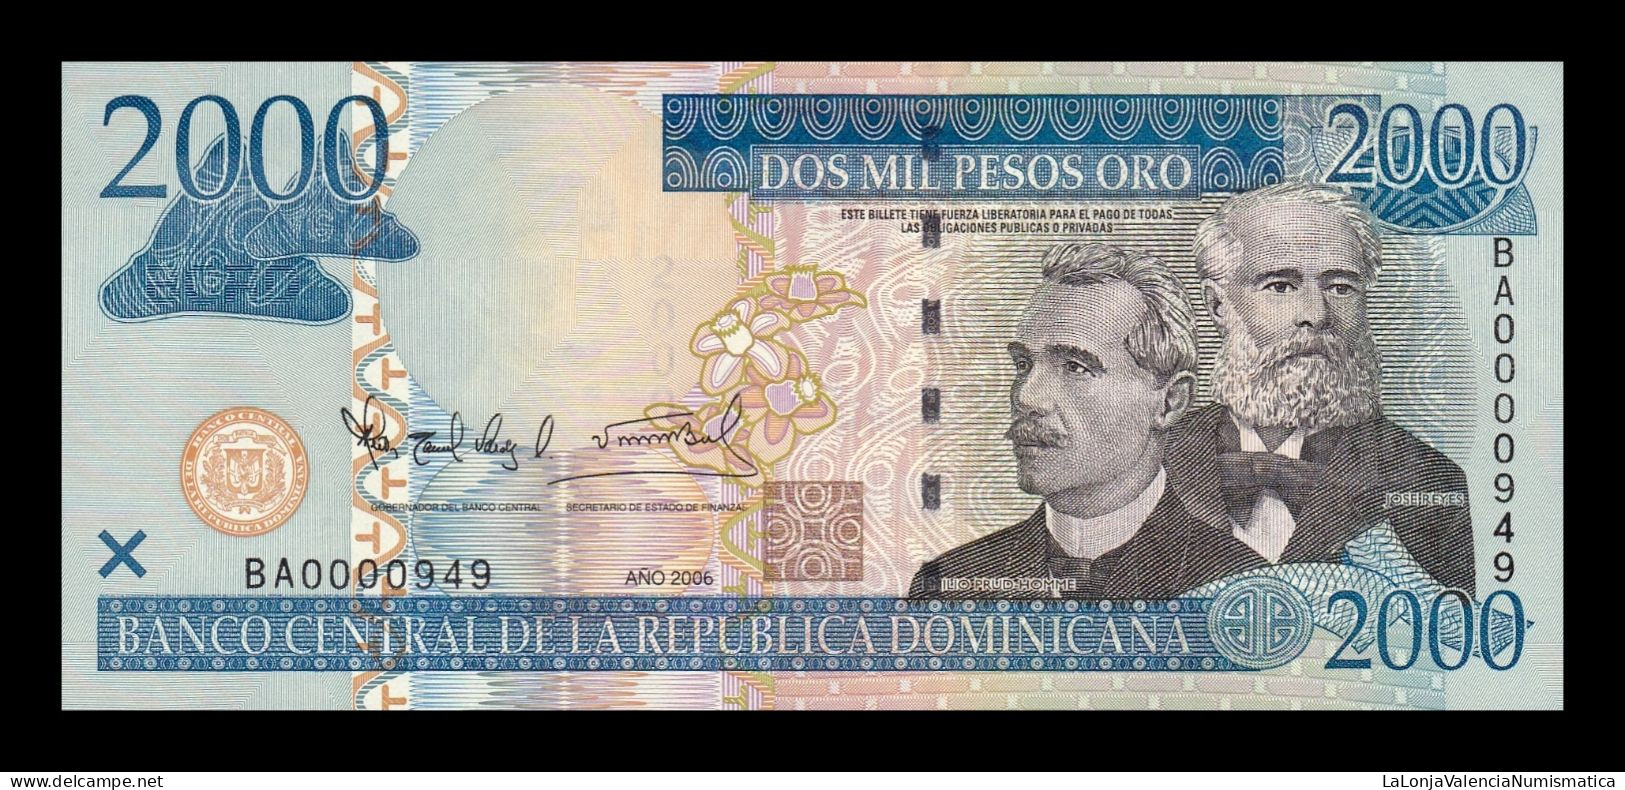 República Dominicana 2000 Pesos Oro 2006 Pick 181a Low Serial 949 Sc Unc - Dominicaine